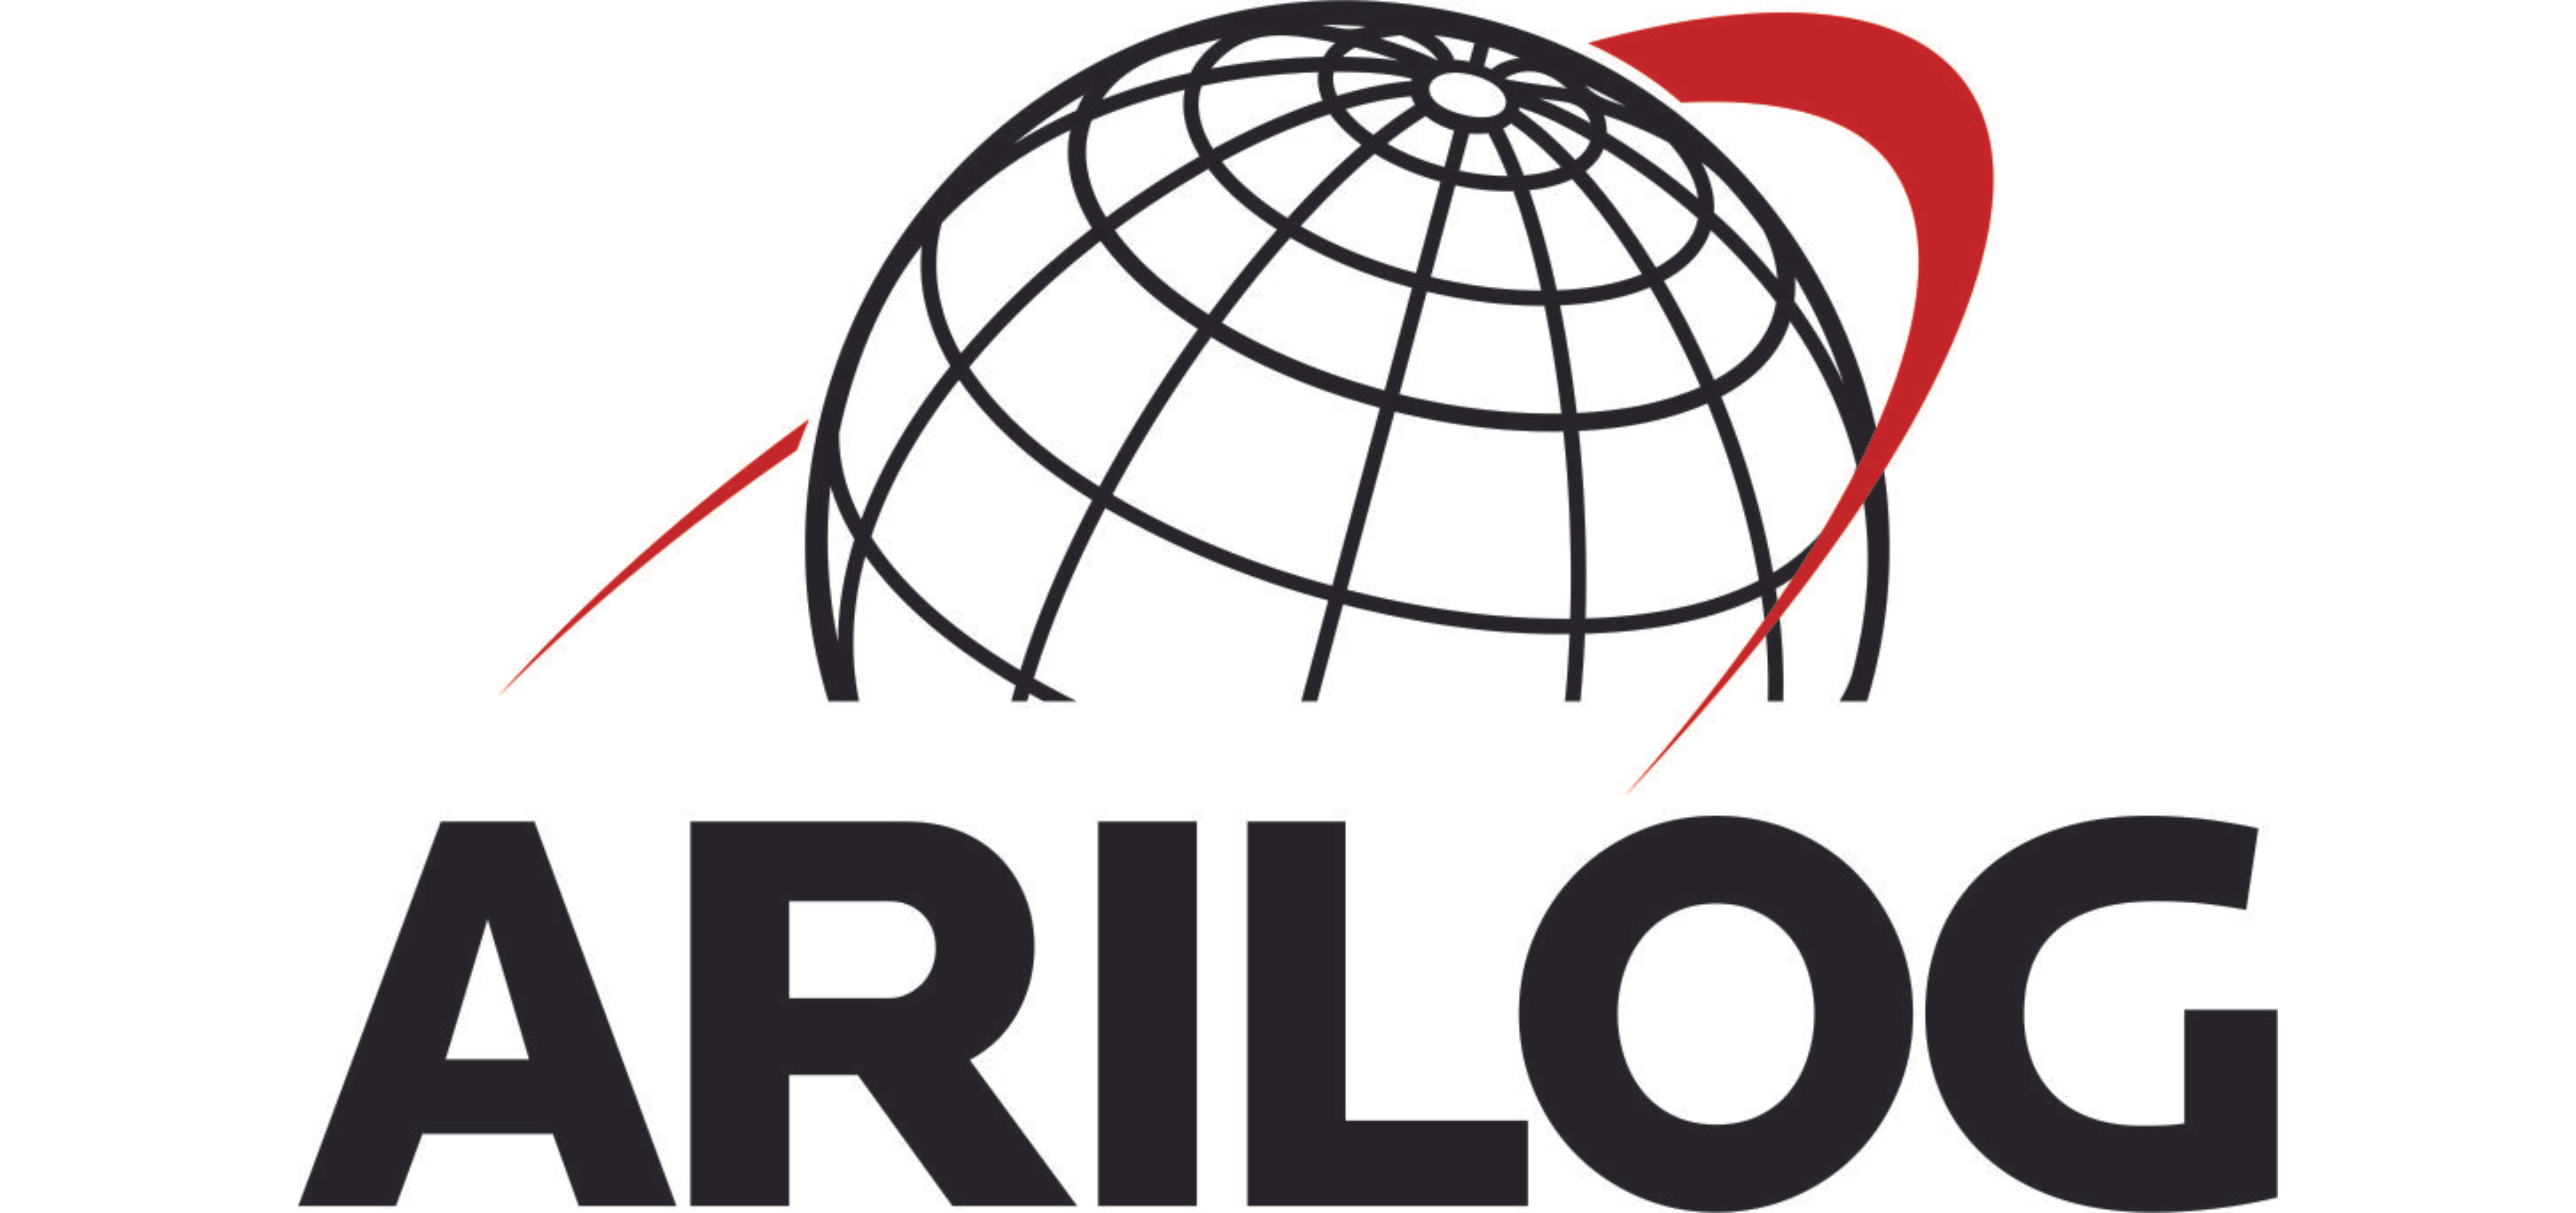 ARILOG_logo site ELA